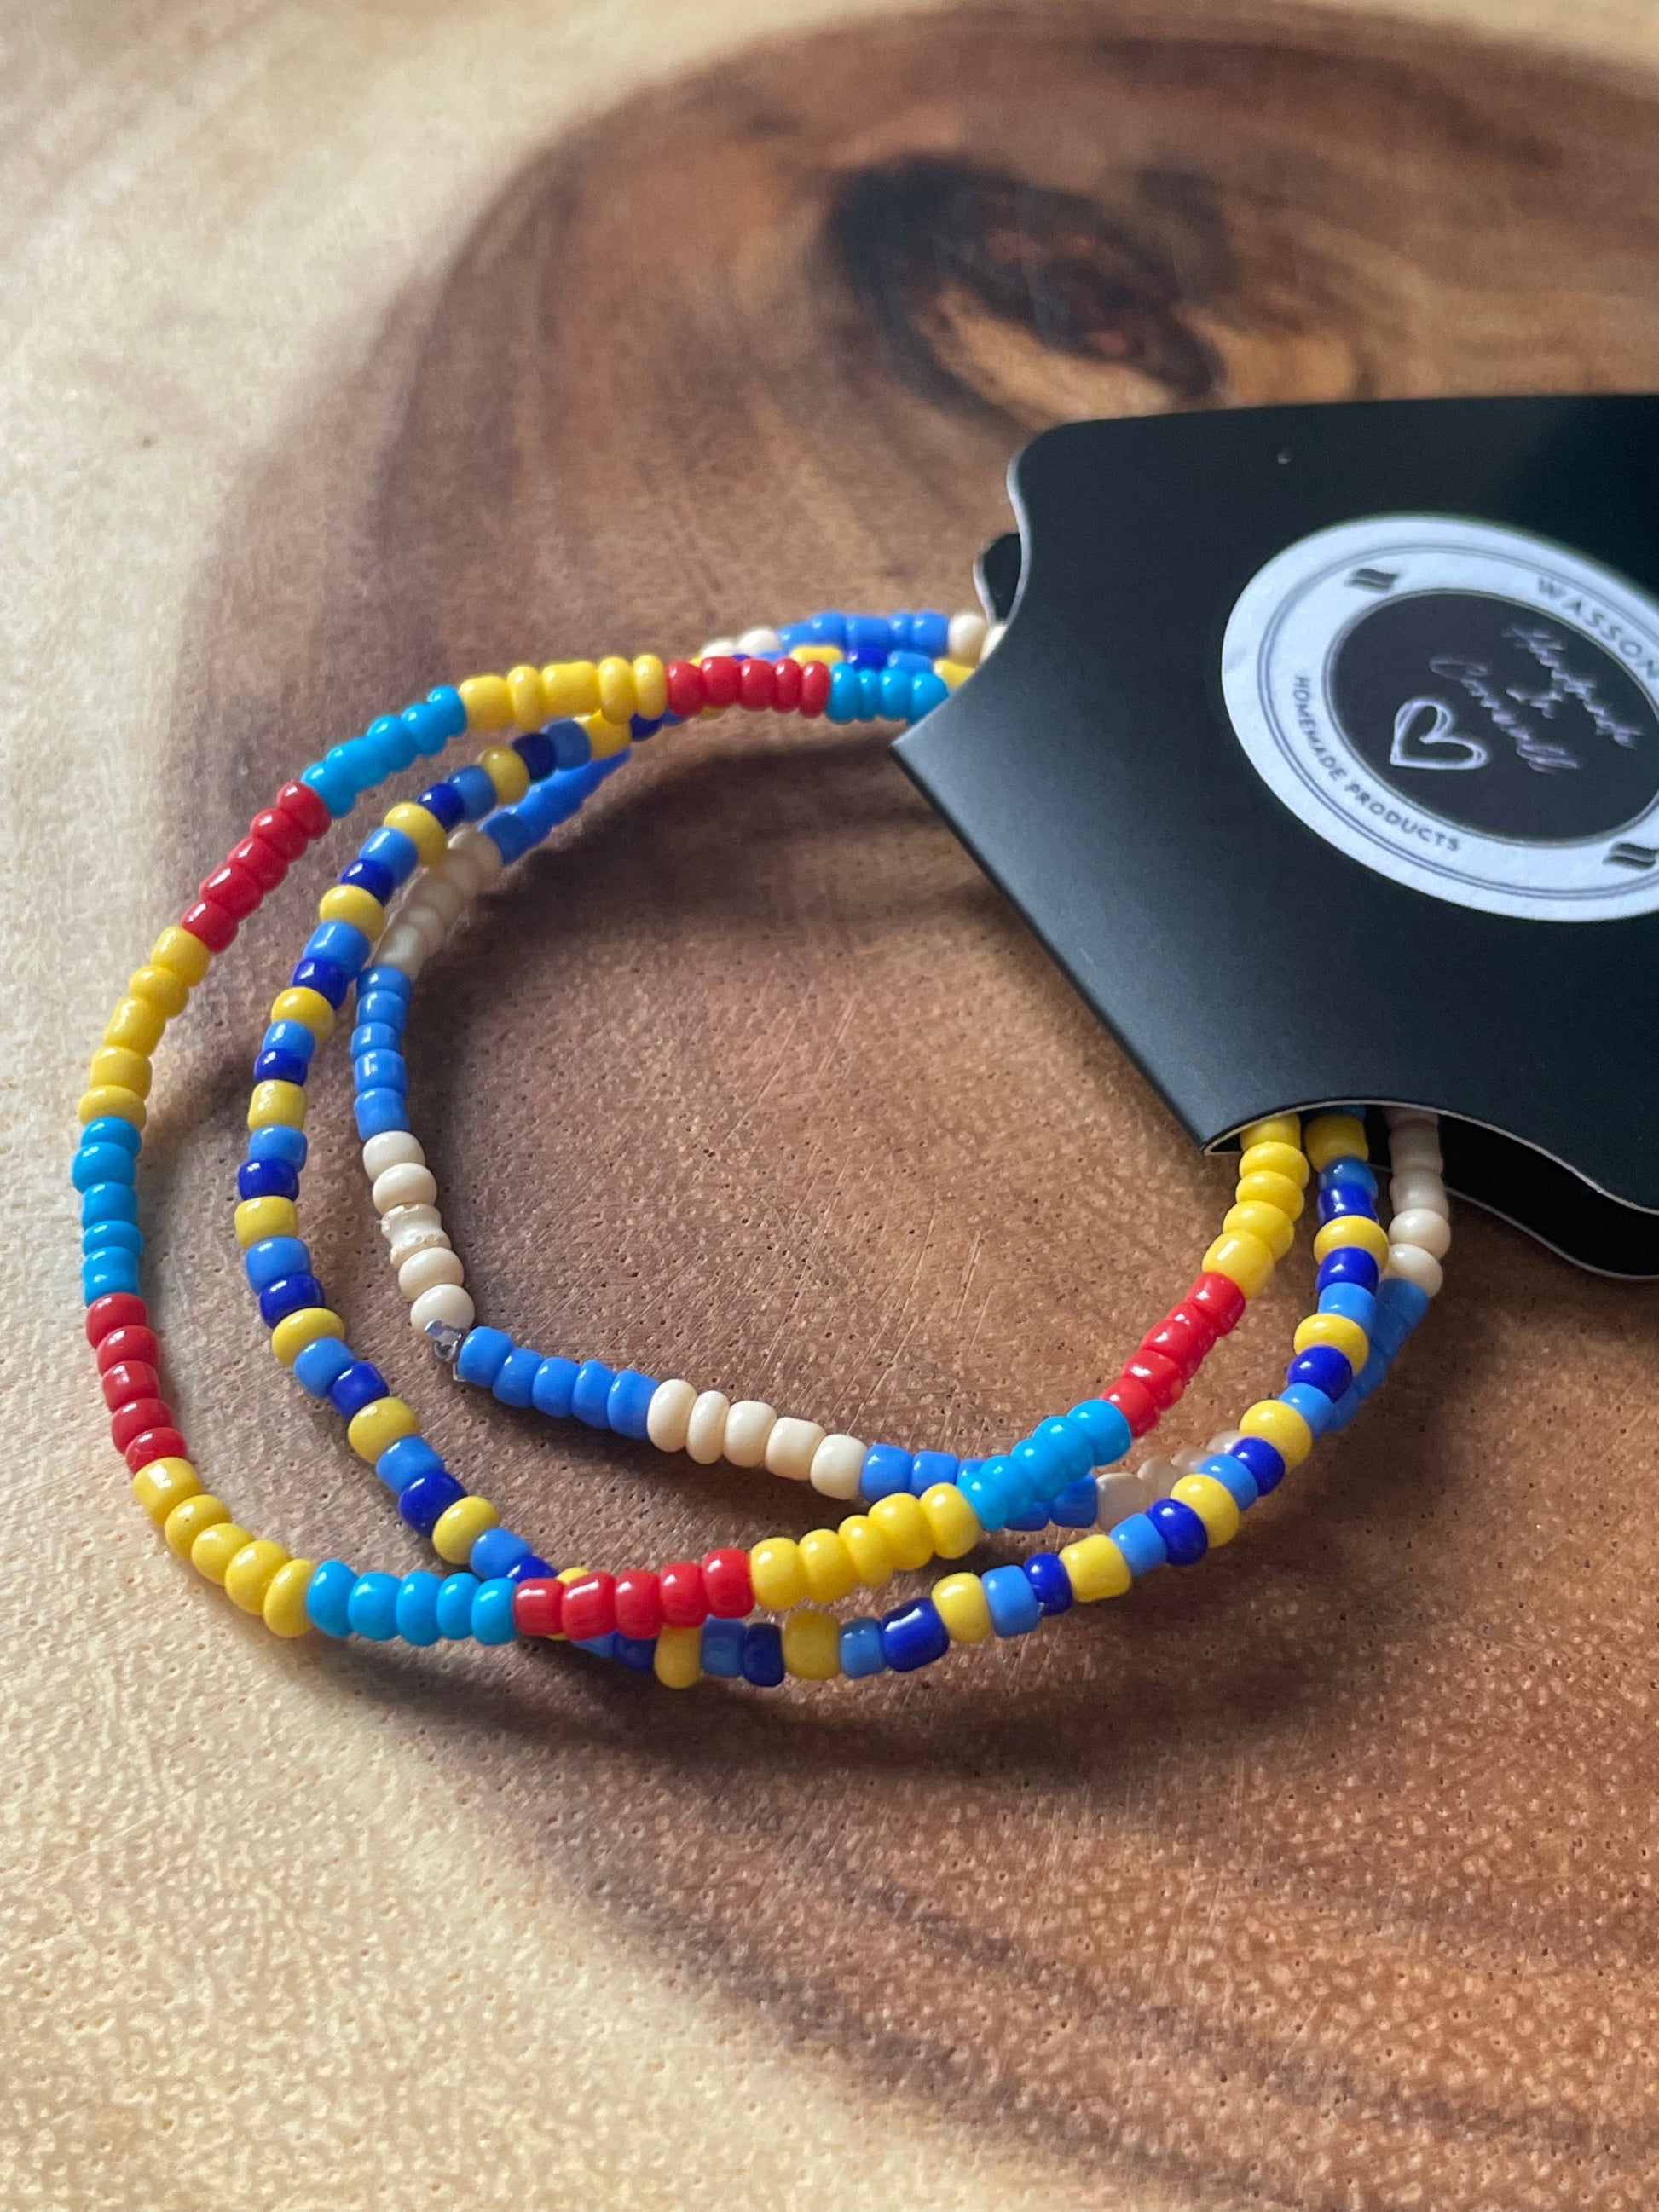 Lego Coloured Bracelet (Pick N Mix) Wasson Wax